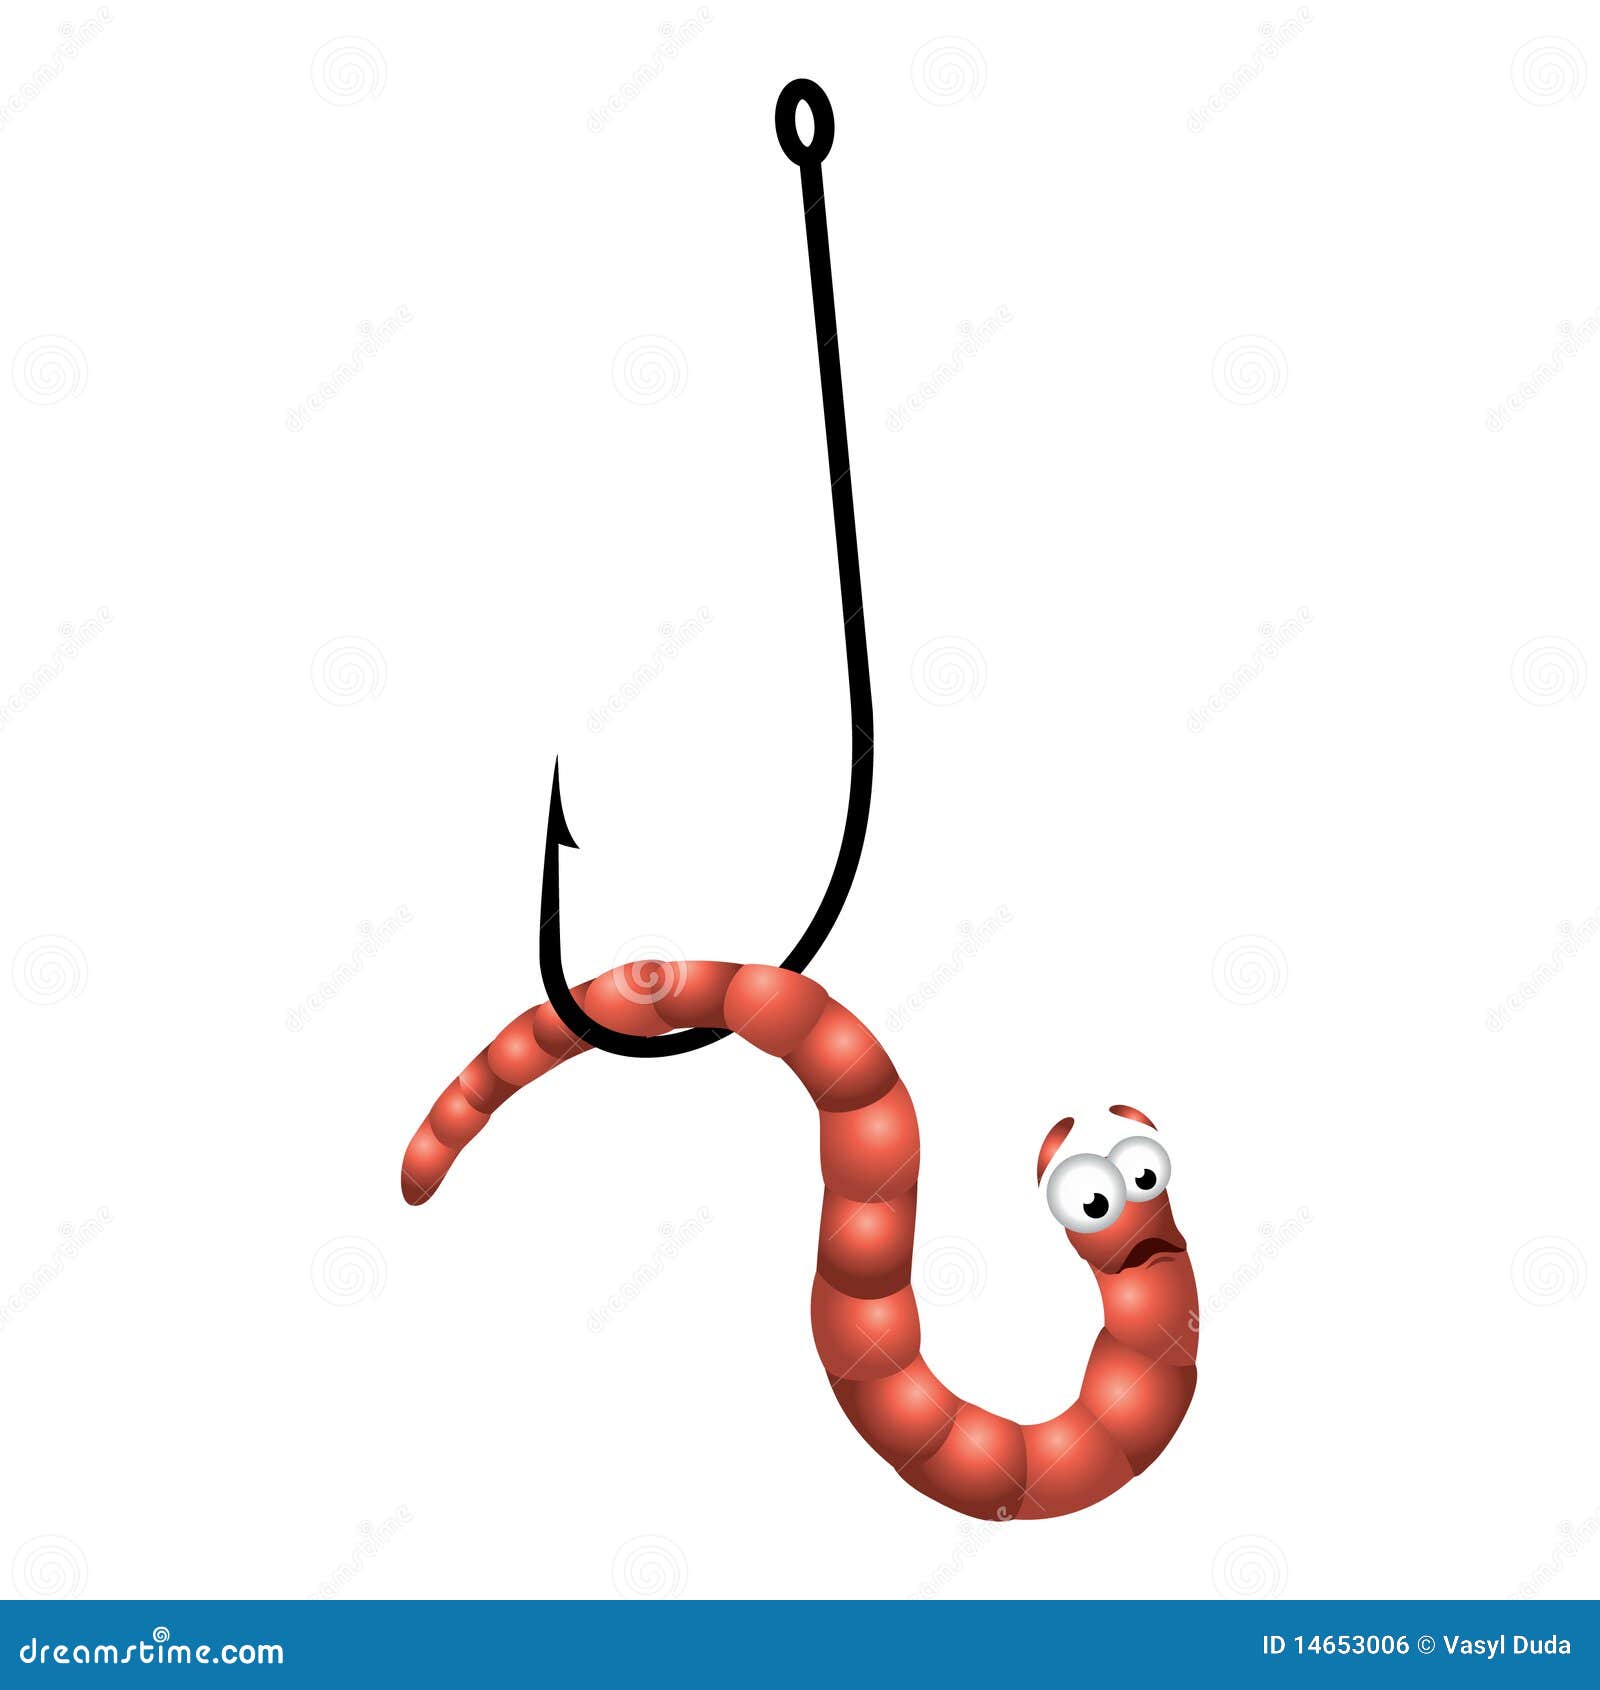 Worm on Hook stock vector. Illustration of cartoon, hanging - 14653006